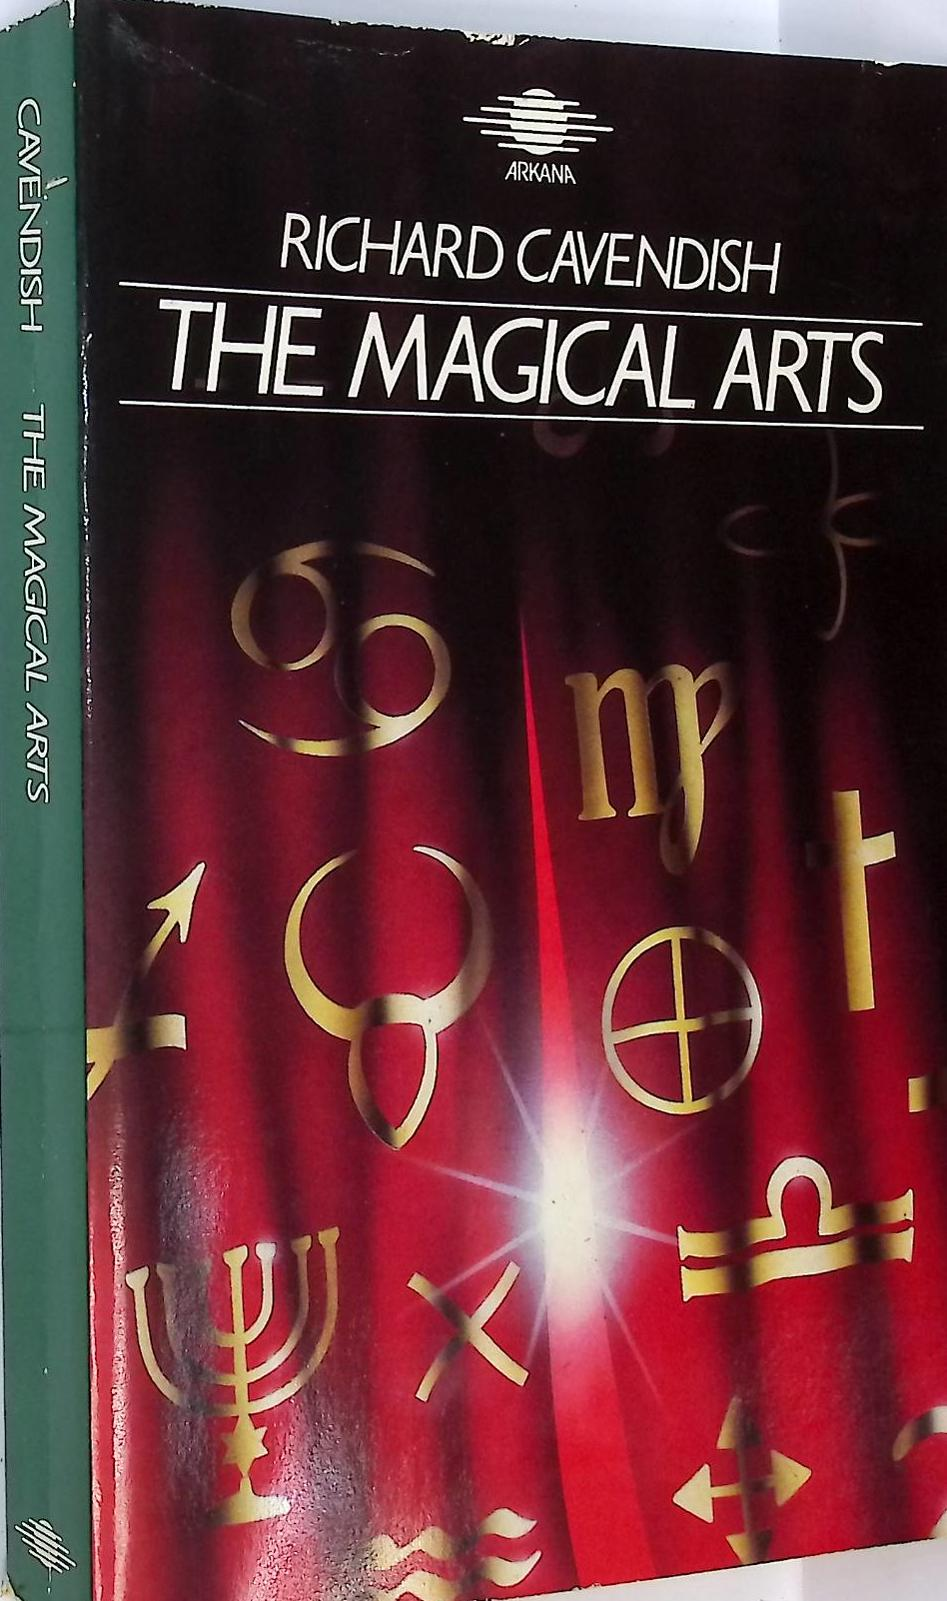 The Magical Arts